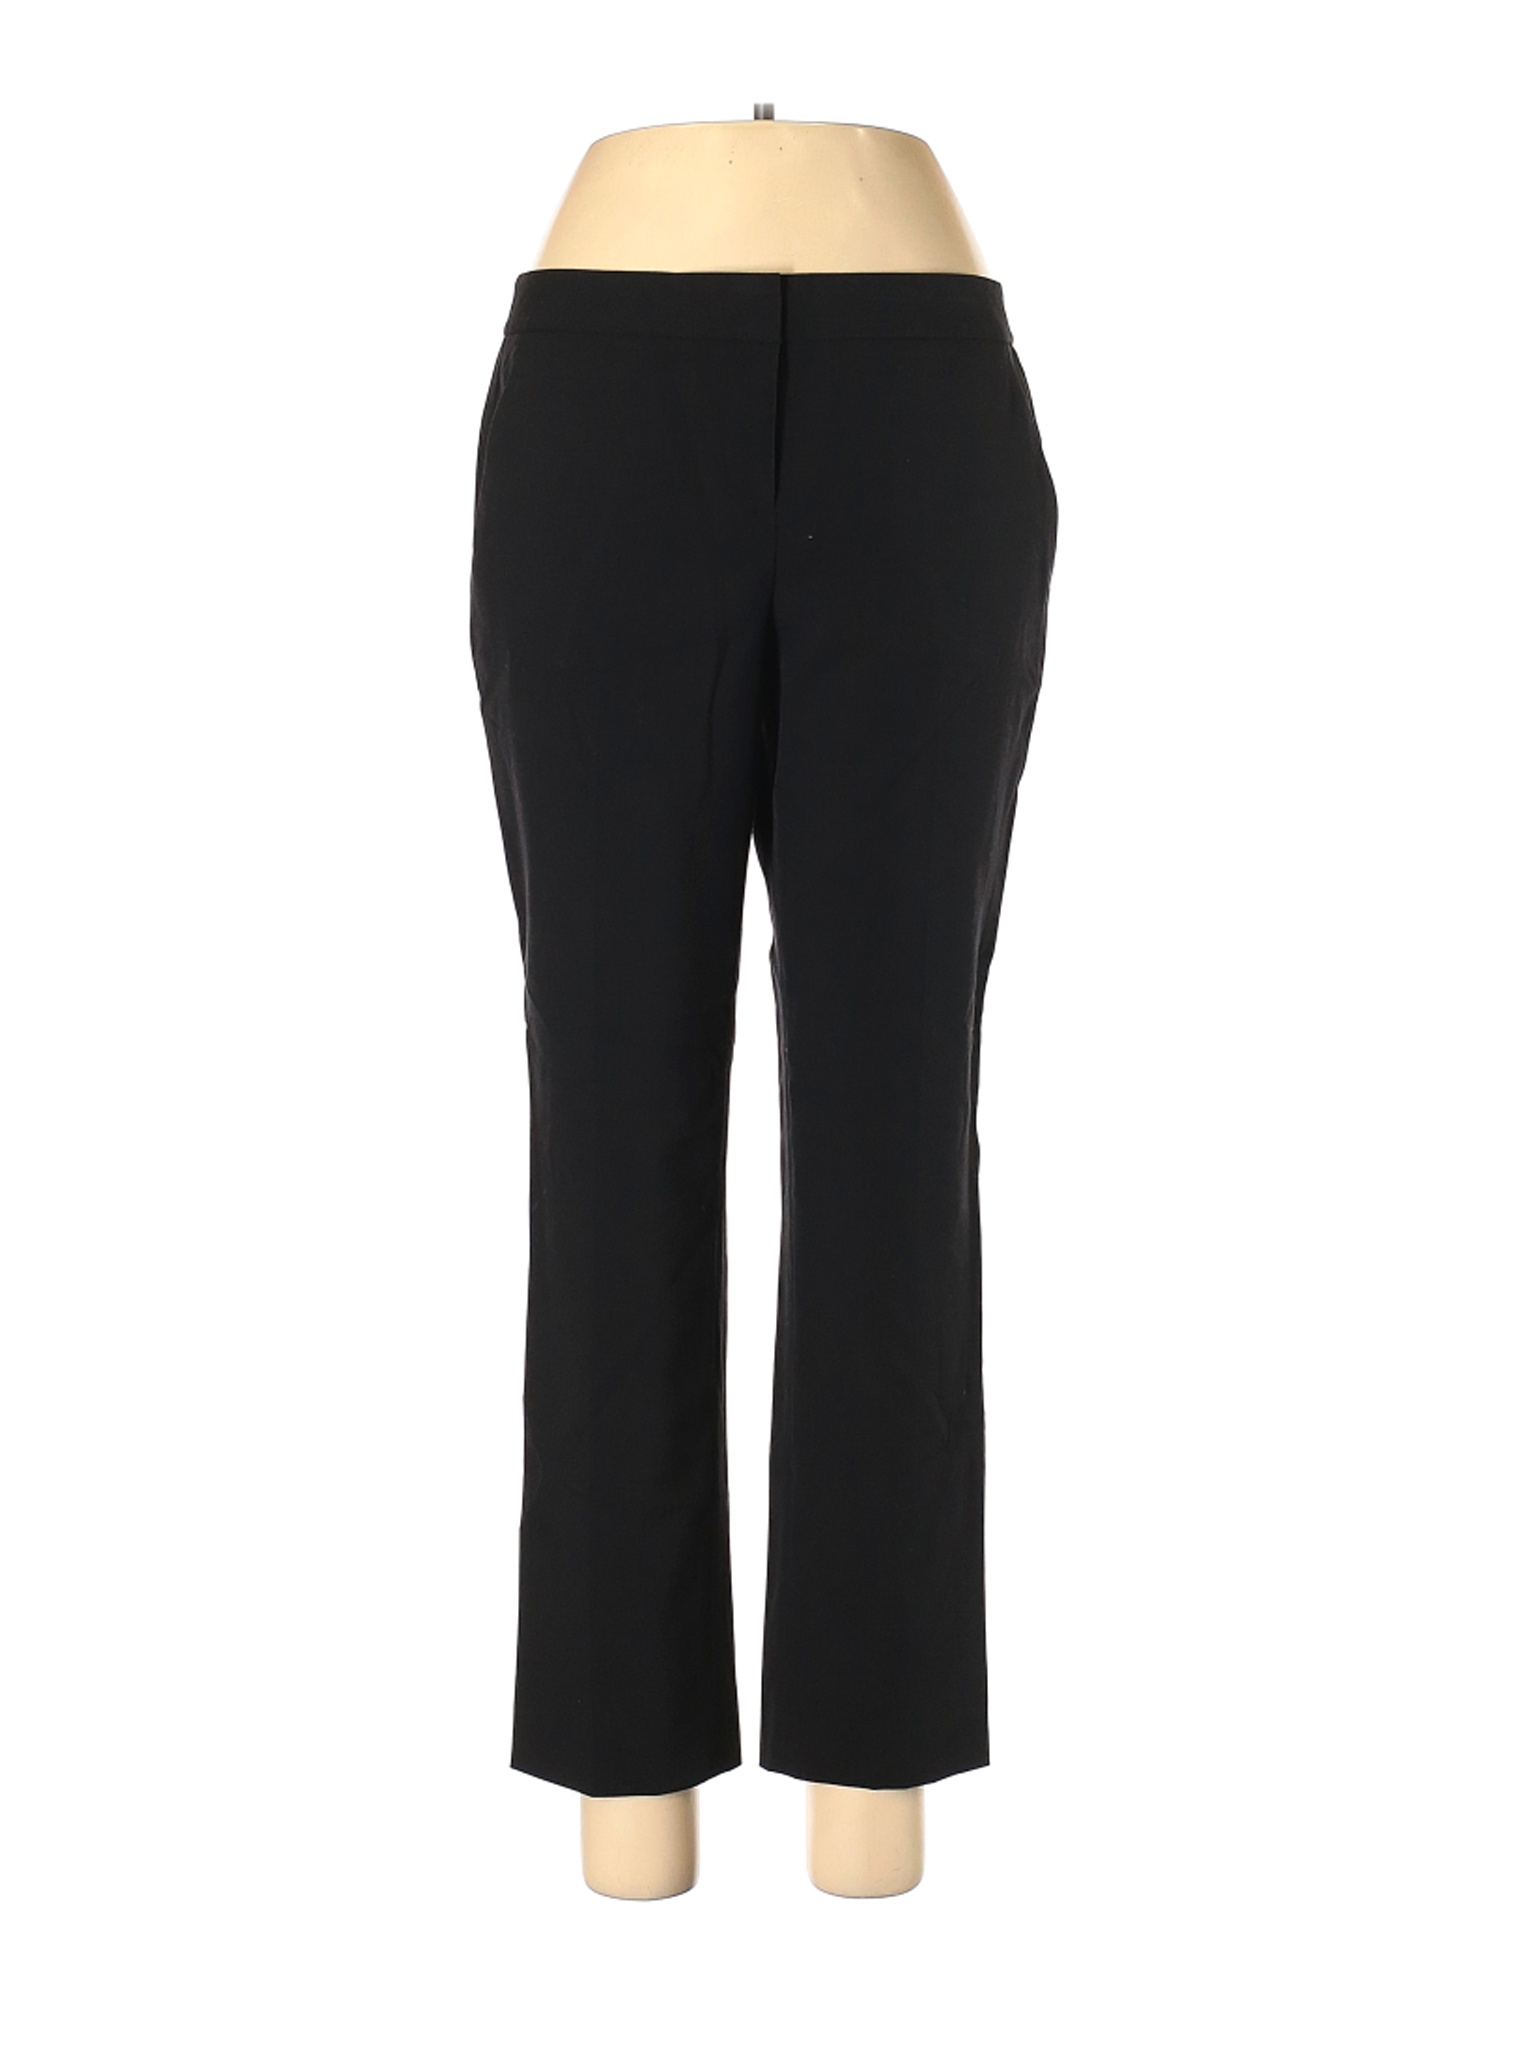 Vince Camuto Women Black Dress Pants 6 | eBay